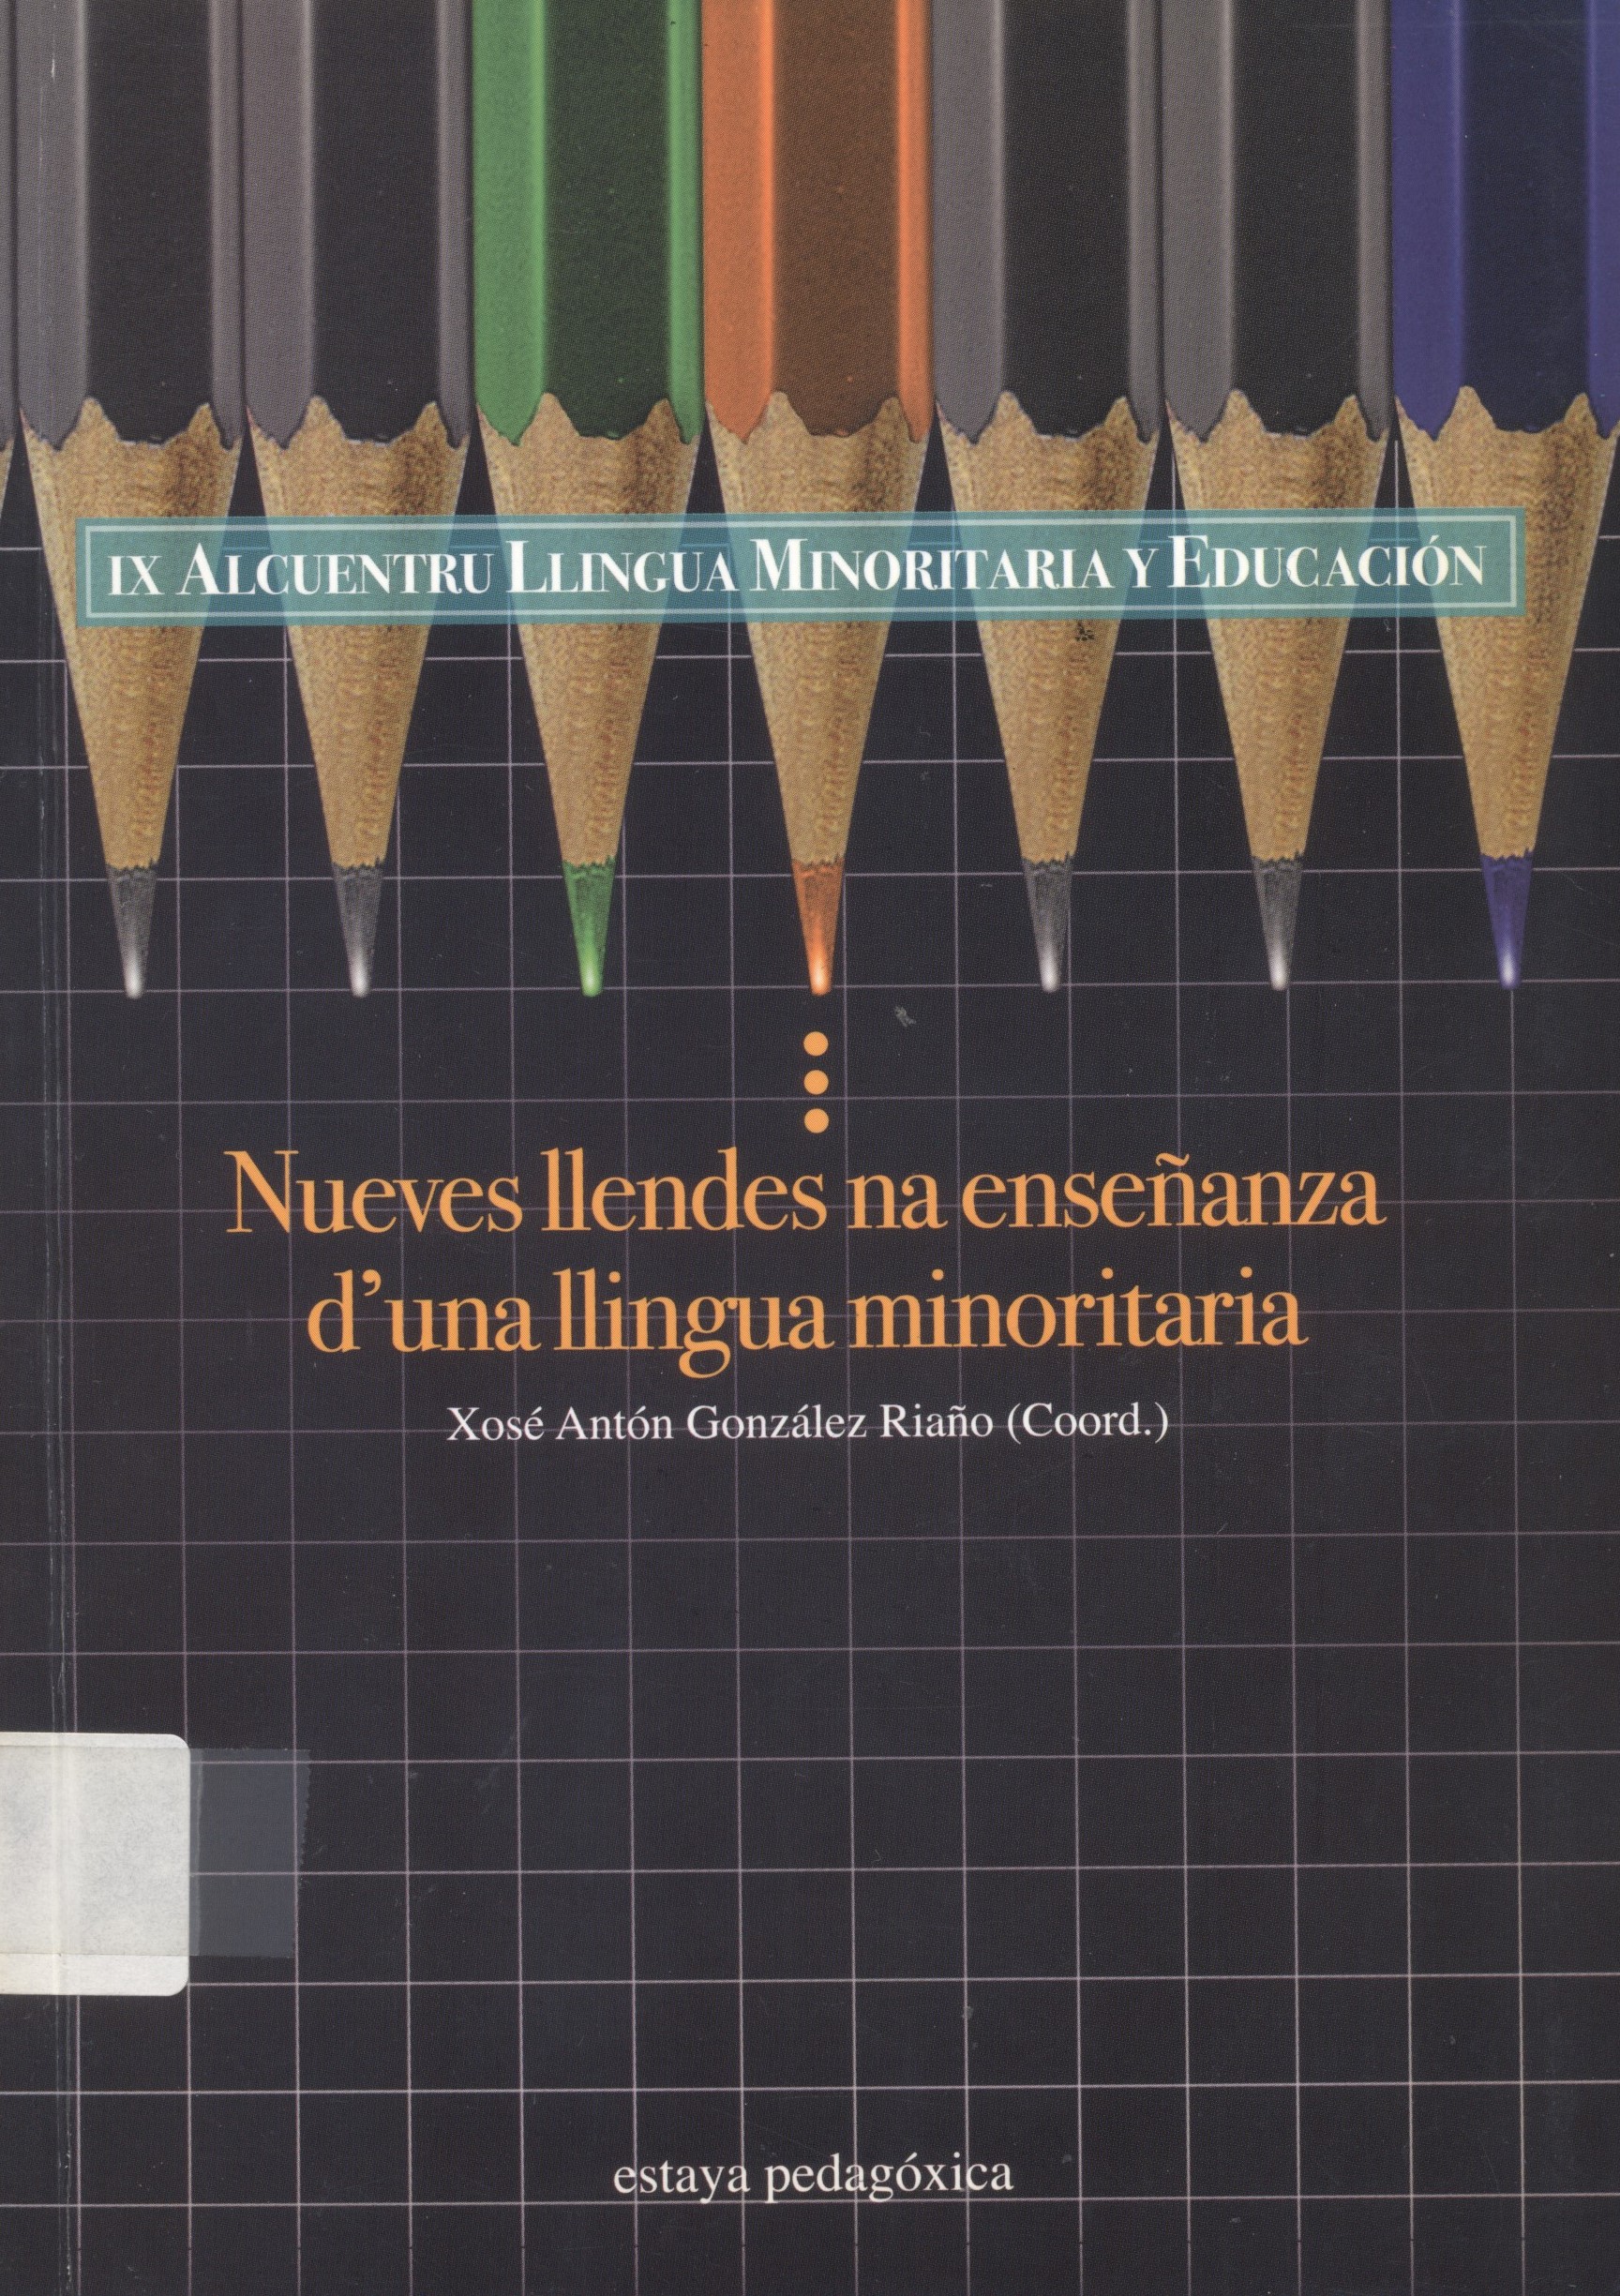 Imagen de portada del libro Nueves llendes na enseñanza d'una llingua minoritaria